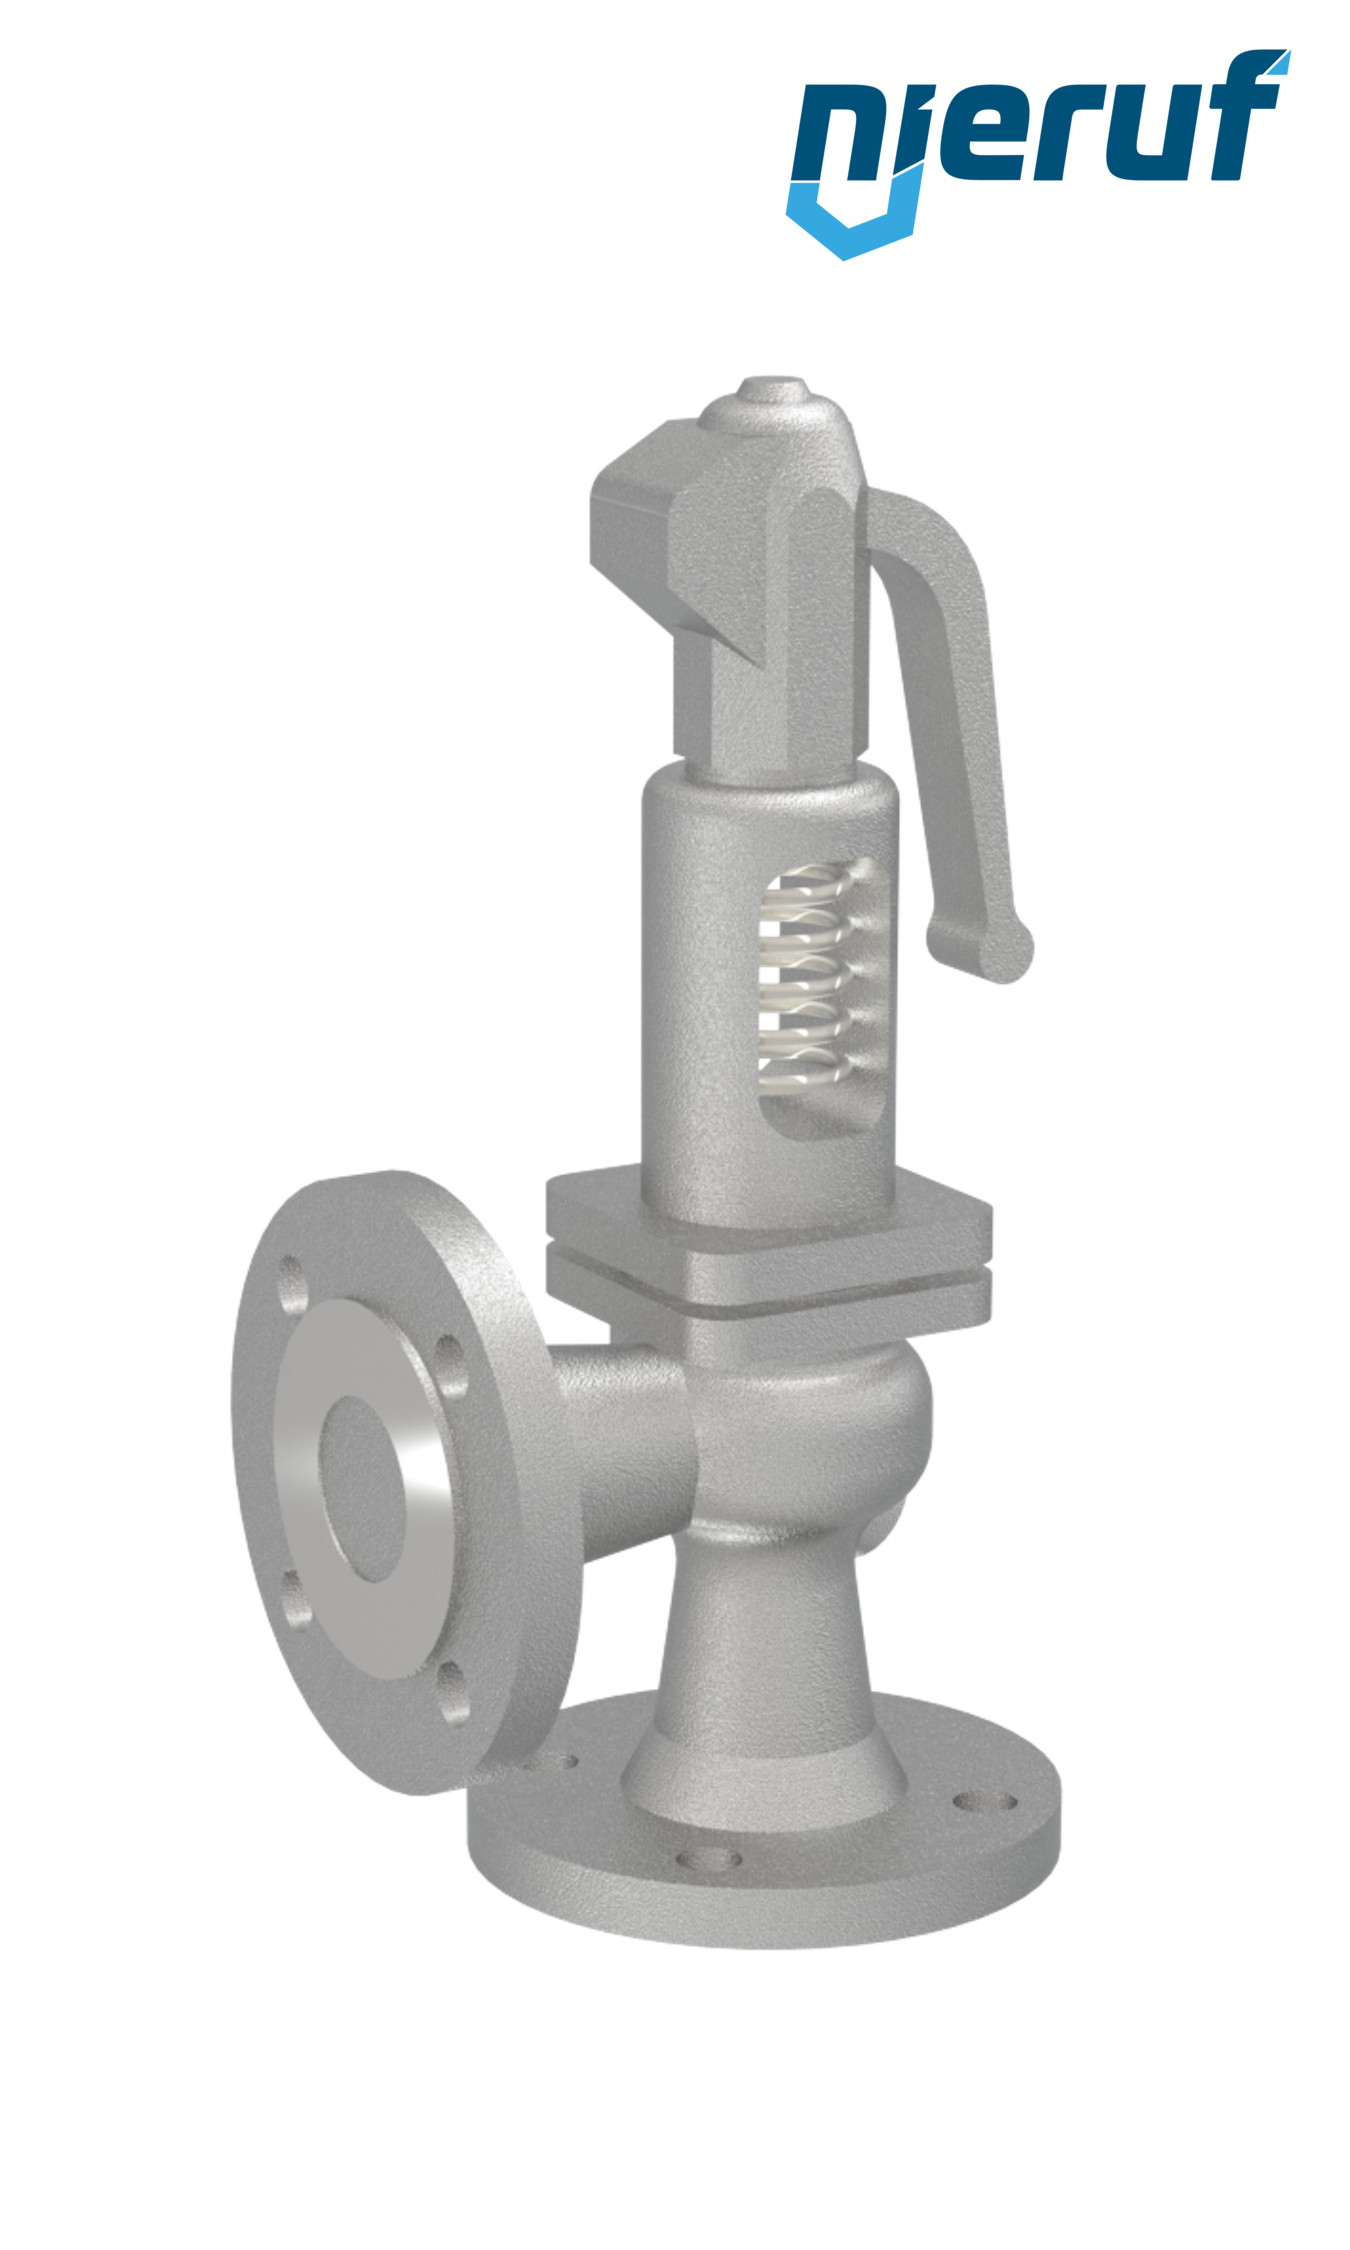 flange-safety valve DN20/DN20 SF0102, cast iron EN-JL1040 FPM, with lever